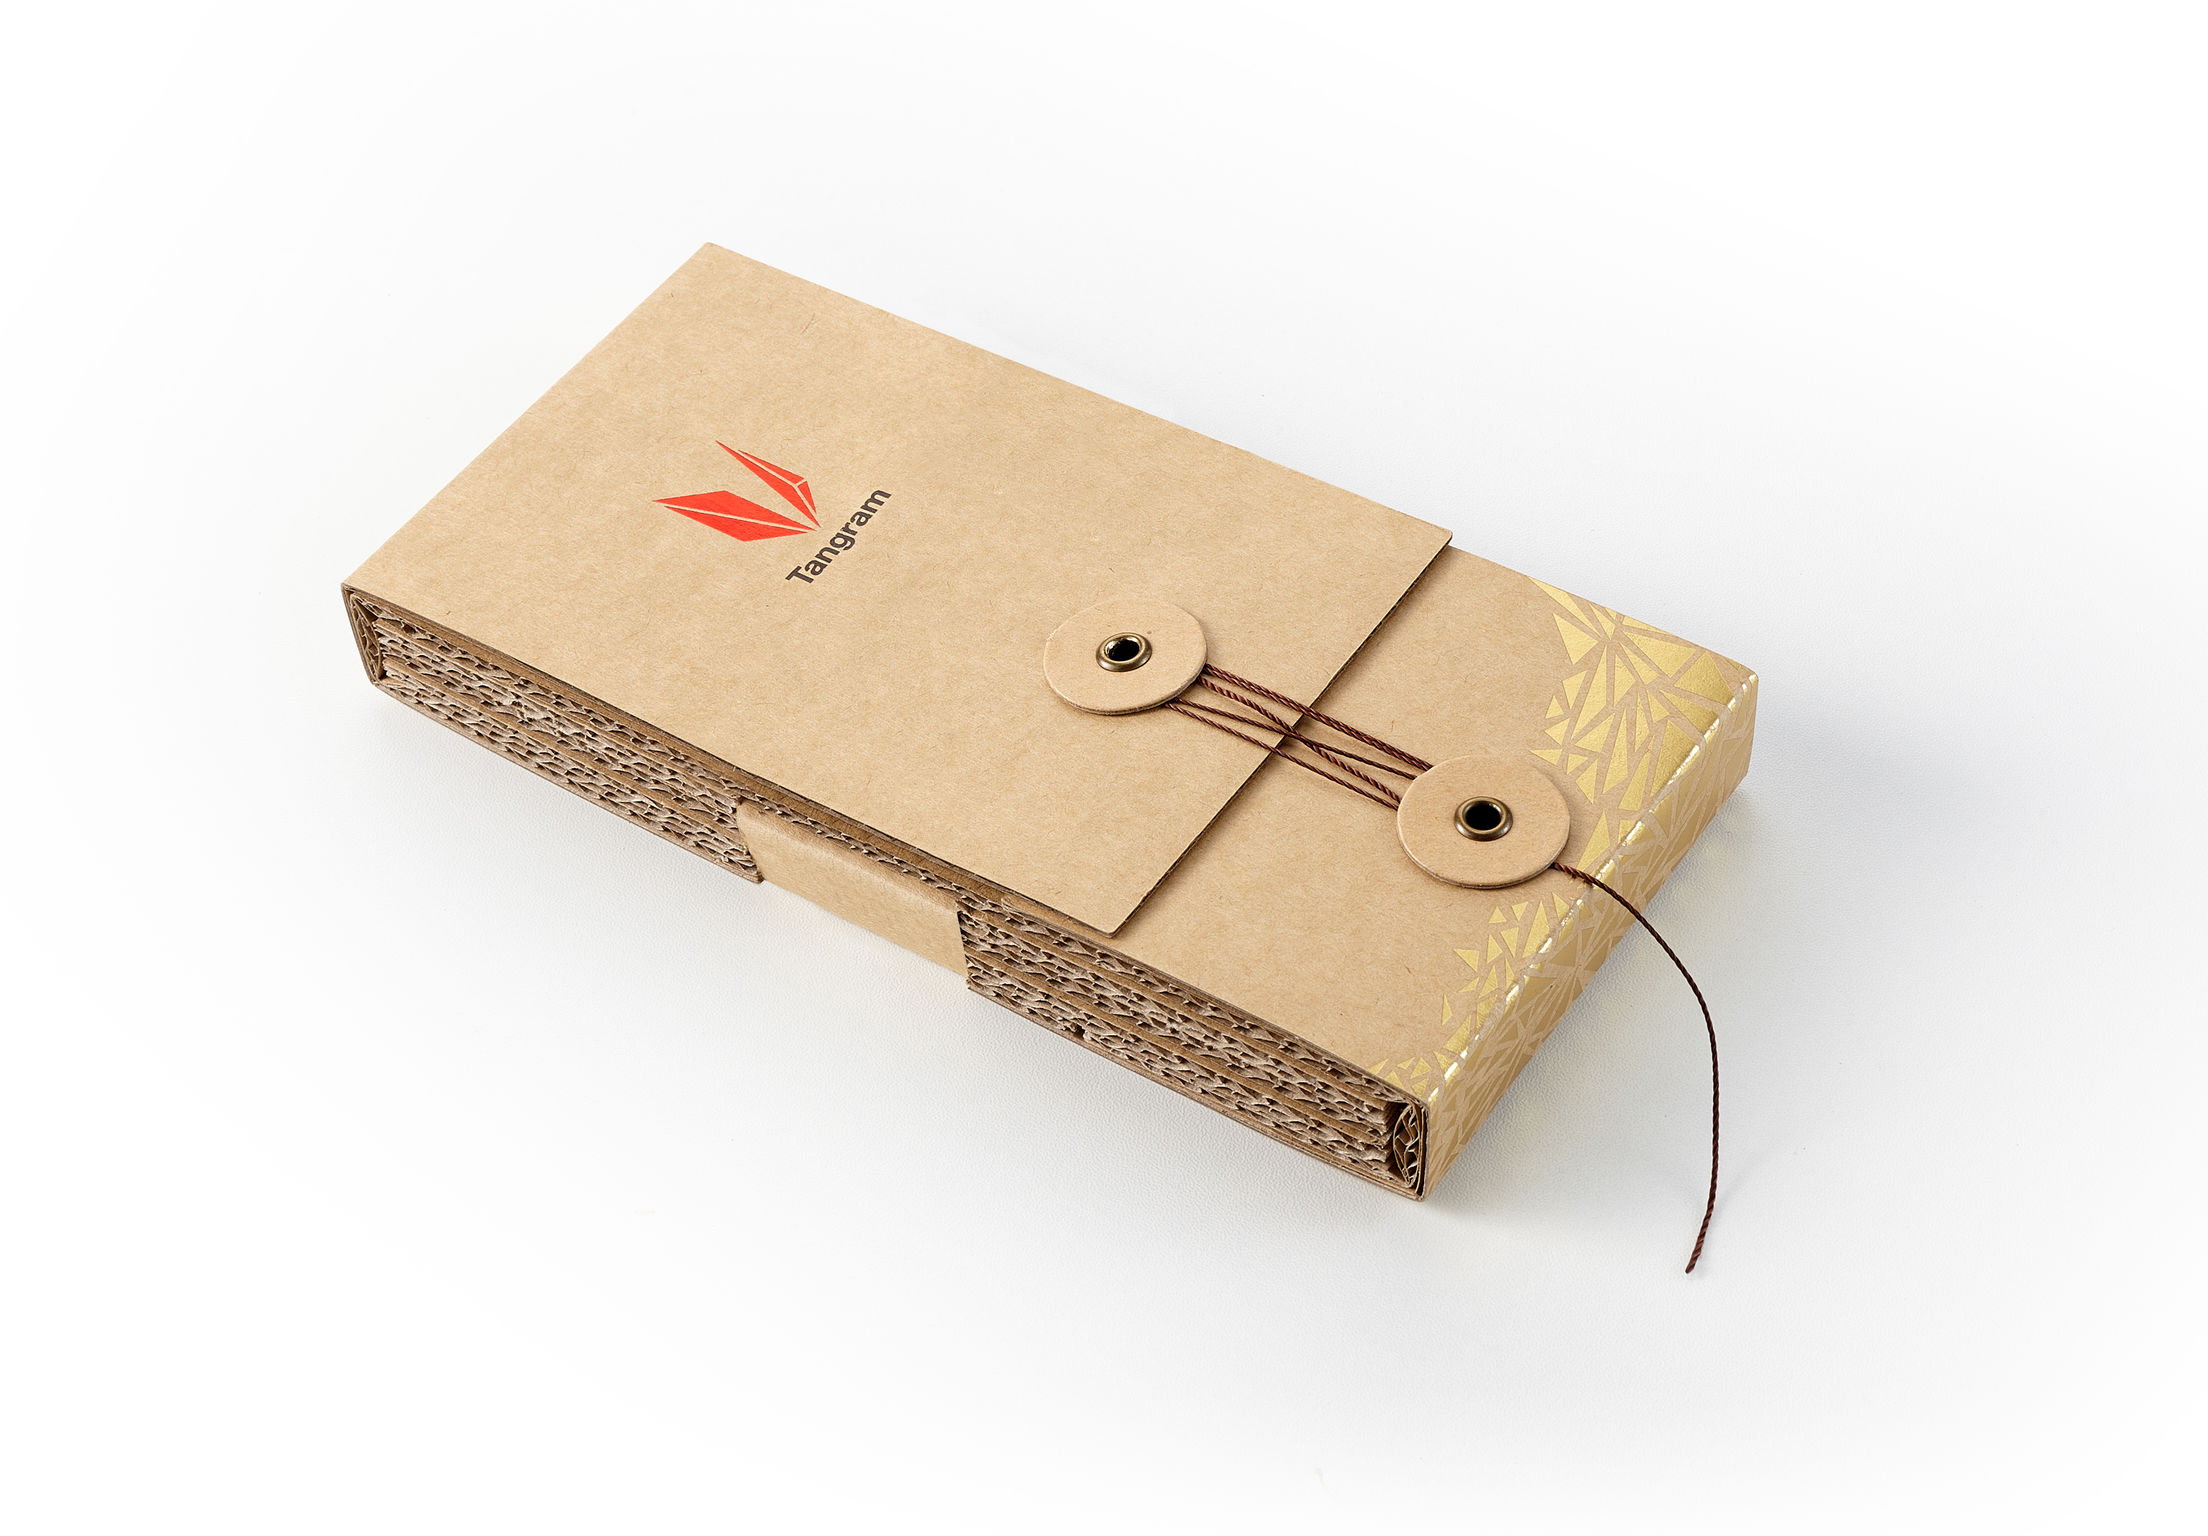 Packaging of Tangram